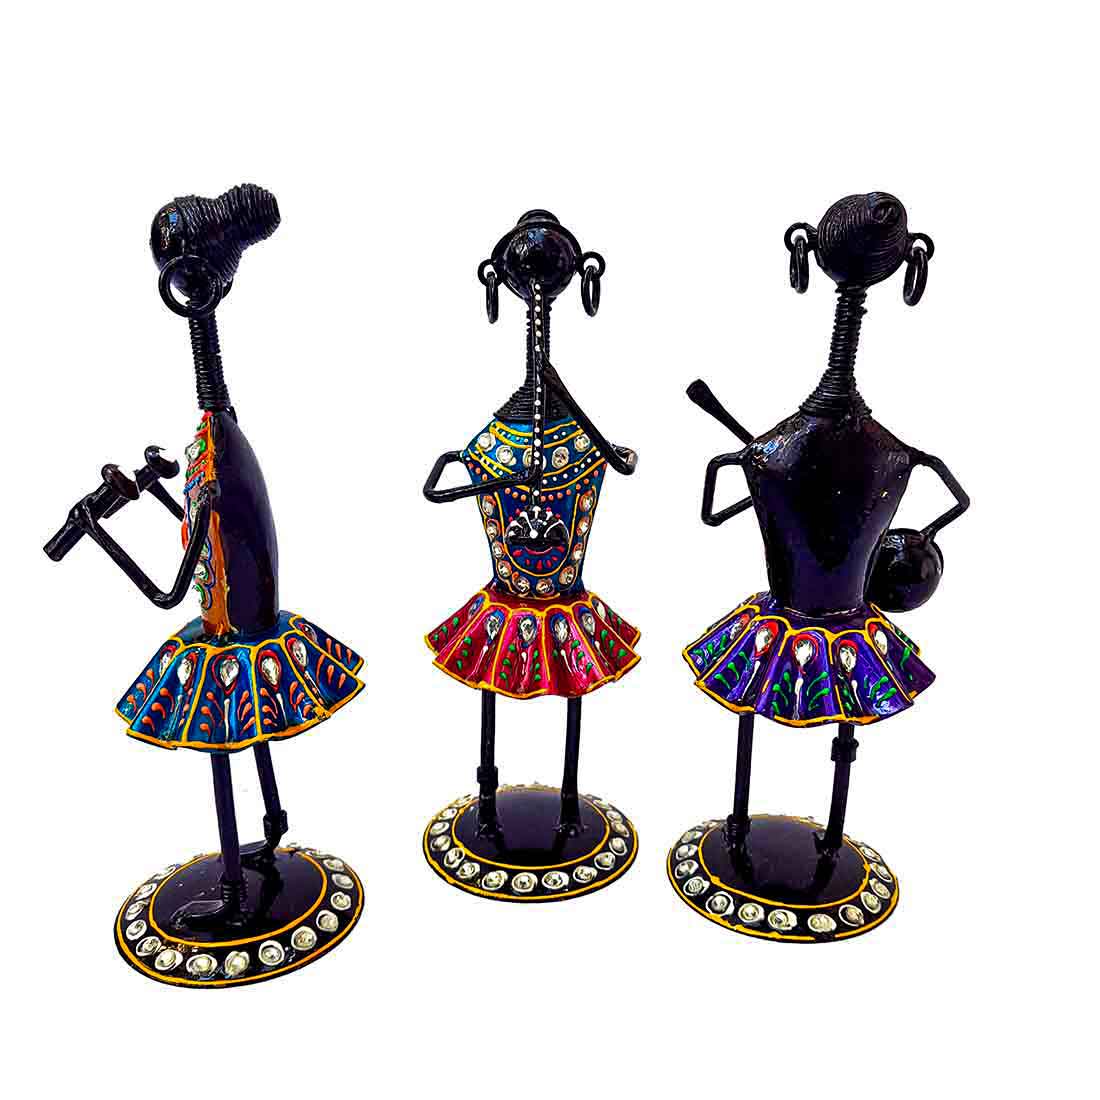 Tribal Musician Showpiece - Metal Figurines - For Table Decor & Living Room - 8 Inch- Set of 3 - ApkaMart